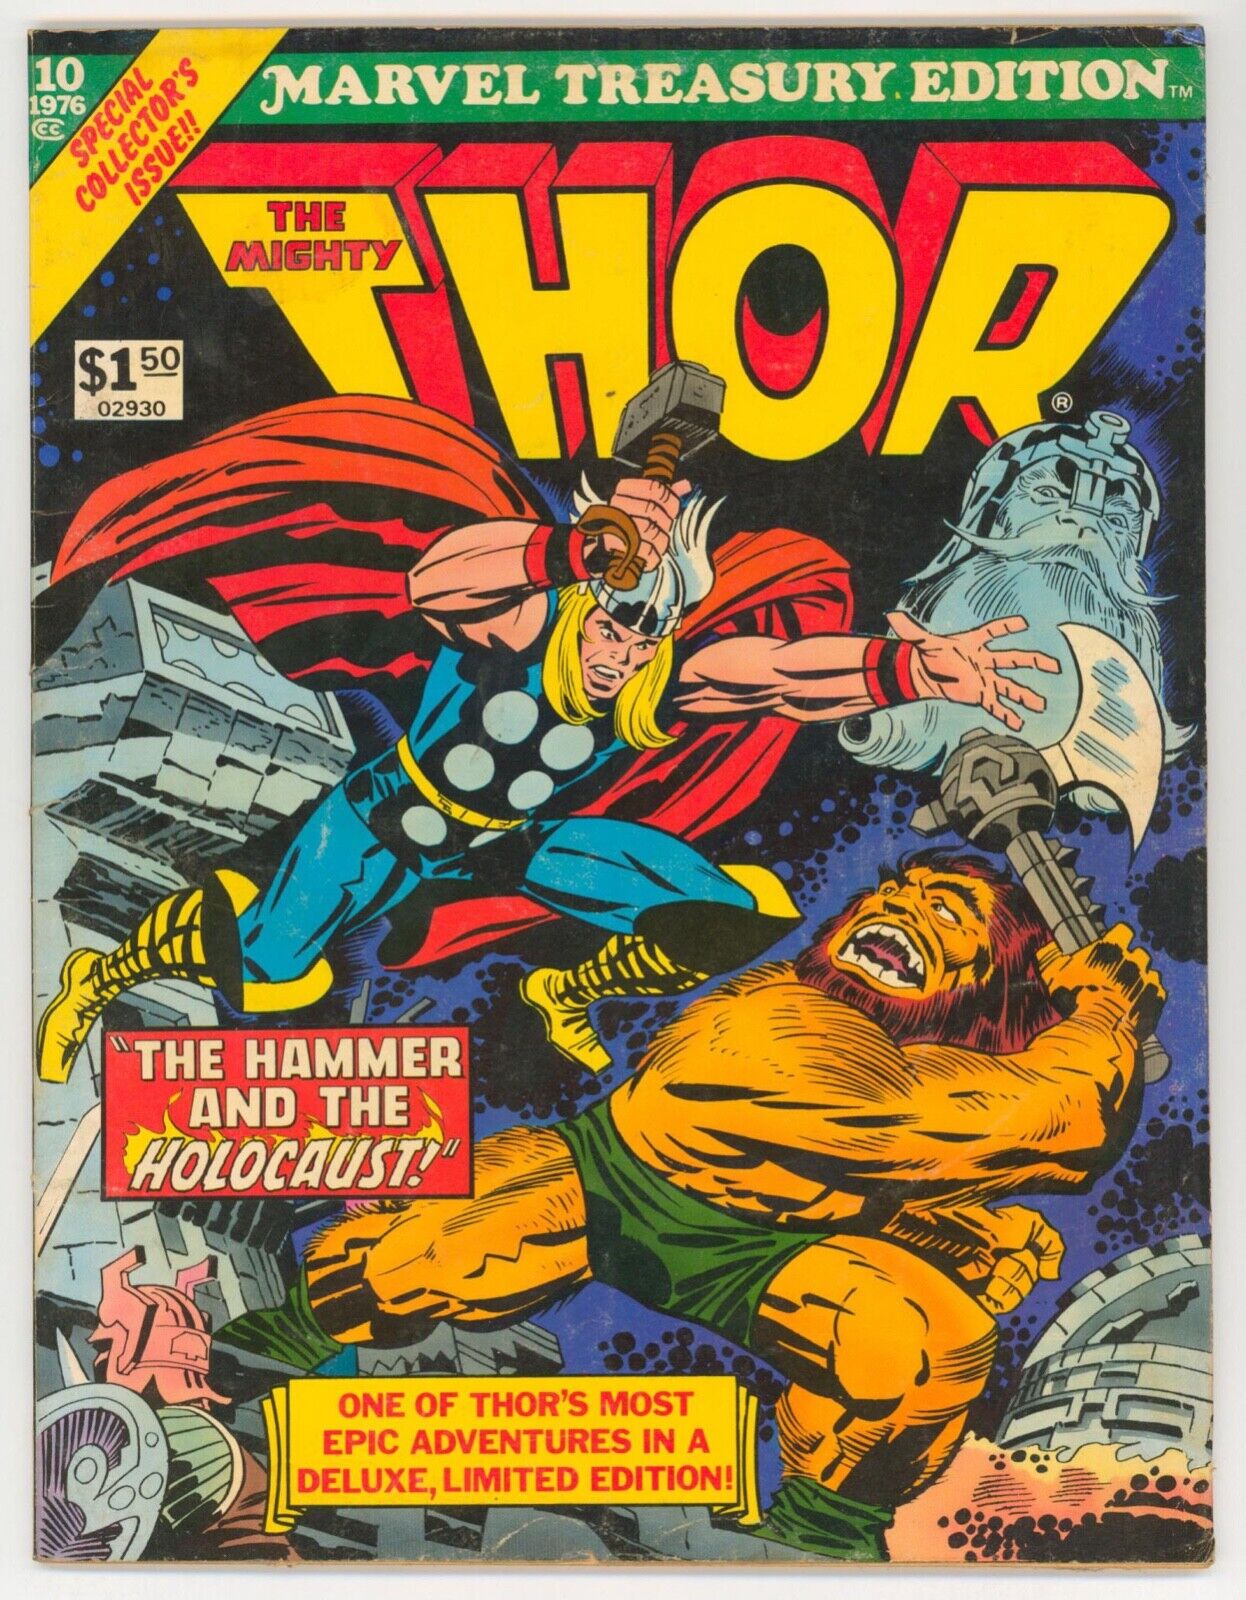 MARVEL TREASURY EDITION #10 VG, Thor, Jack Kirby covers, Comics 1976